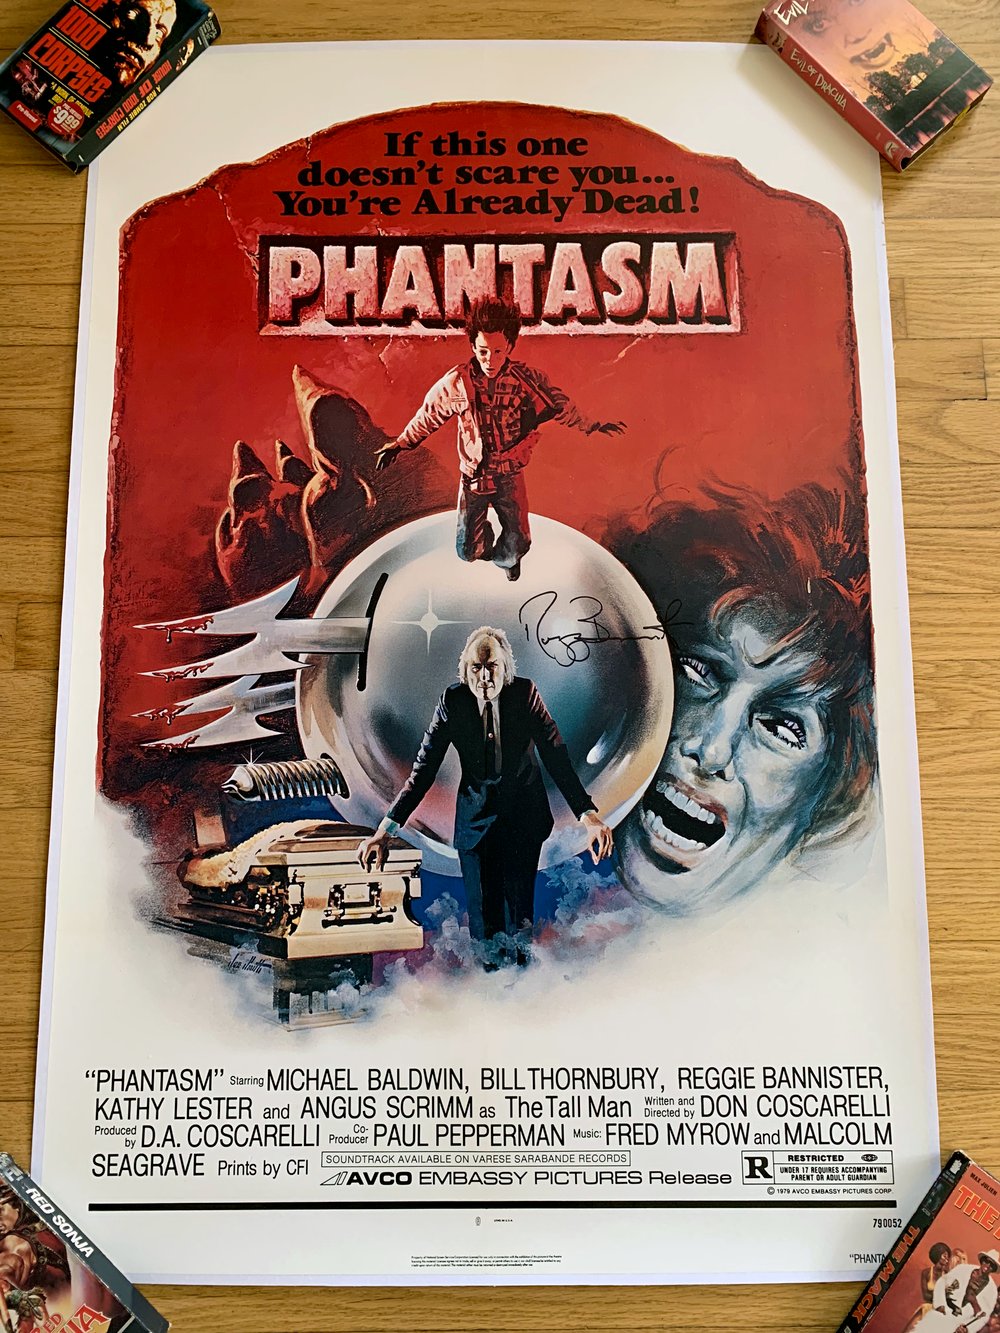 1979 PHANTASM Original Linen Backed U.S. One Sheet Movie Poster Signed by Reggie Bannister